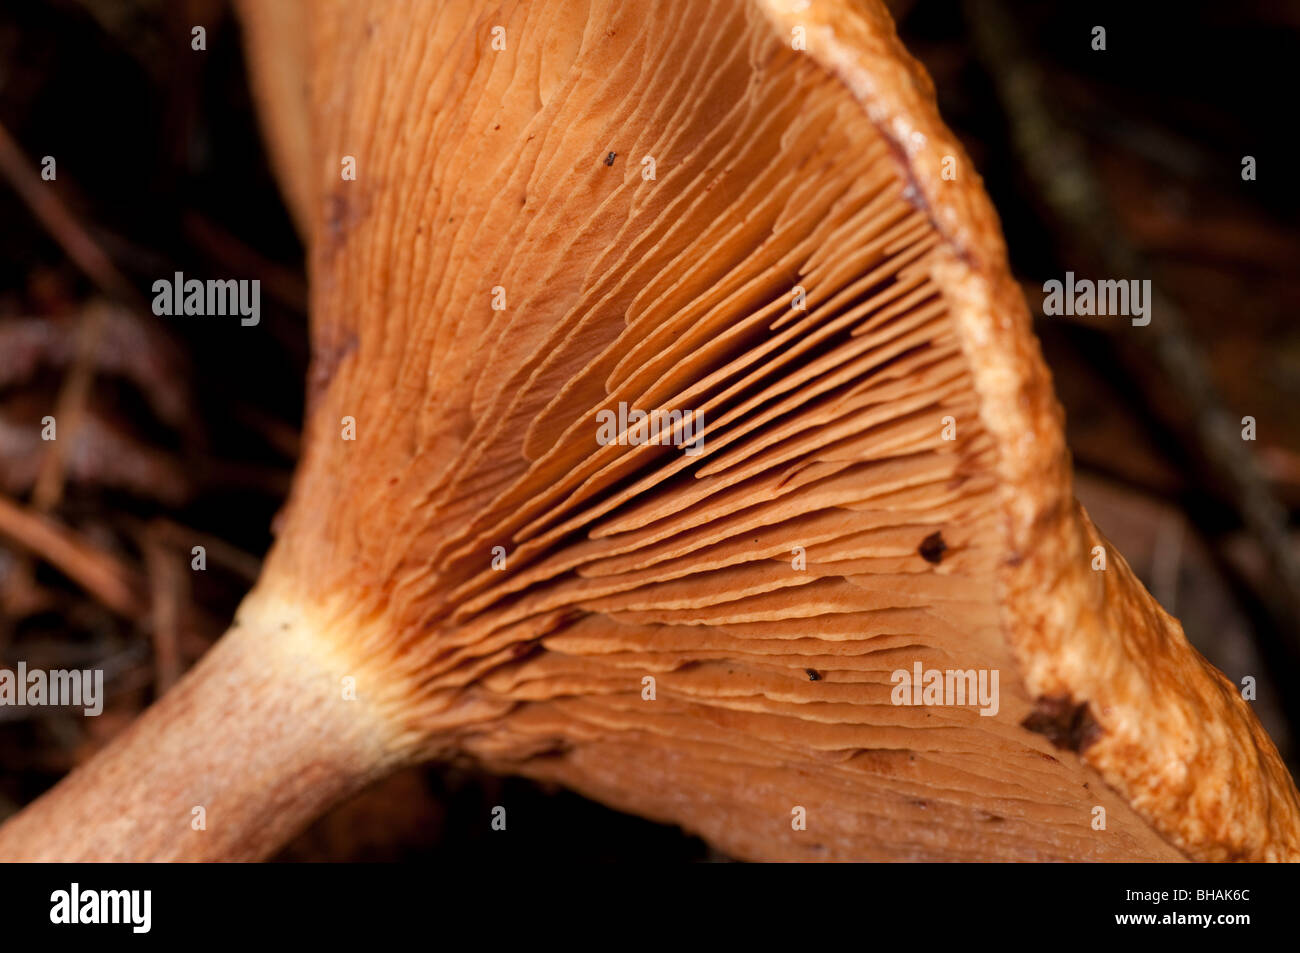 Underside of toadstool showing gills Stock Photo